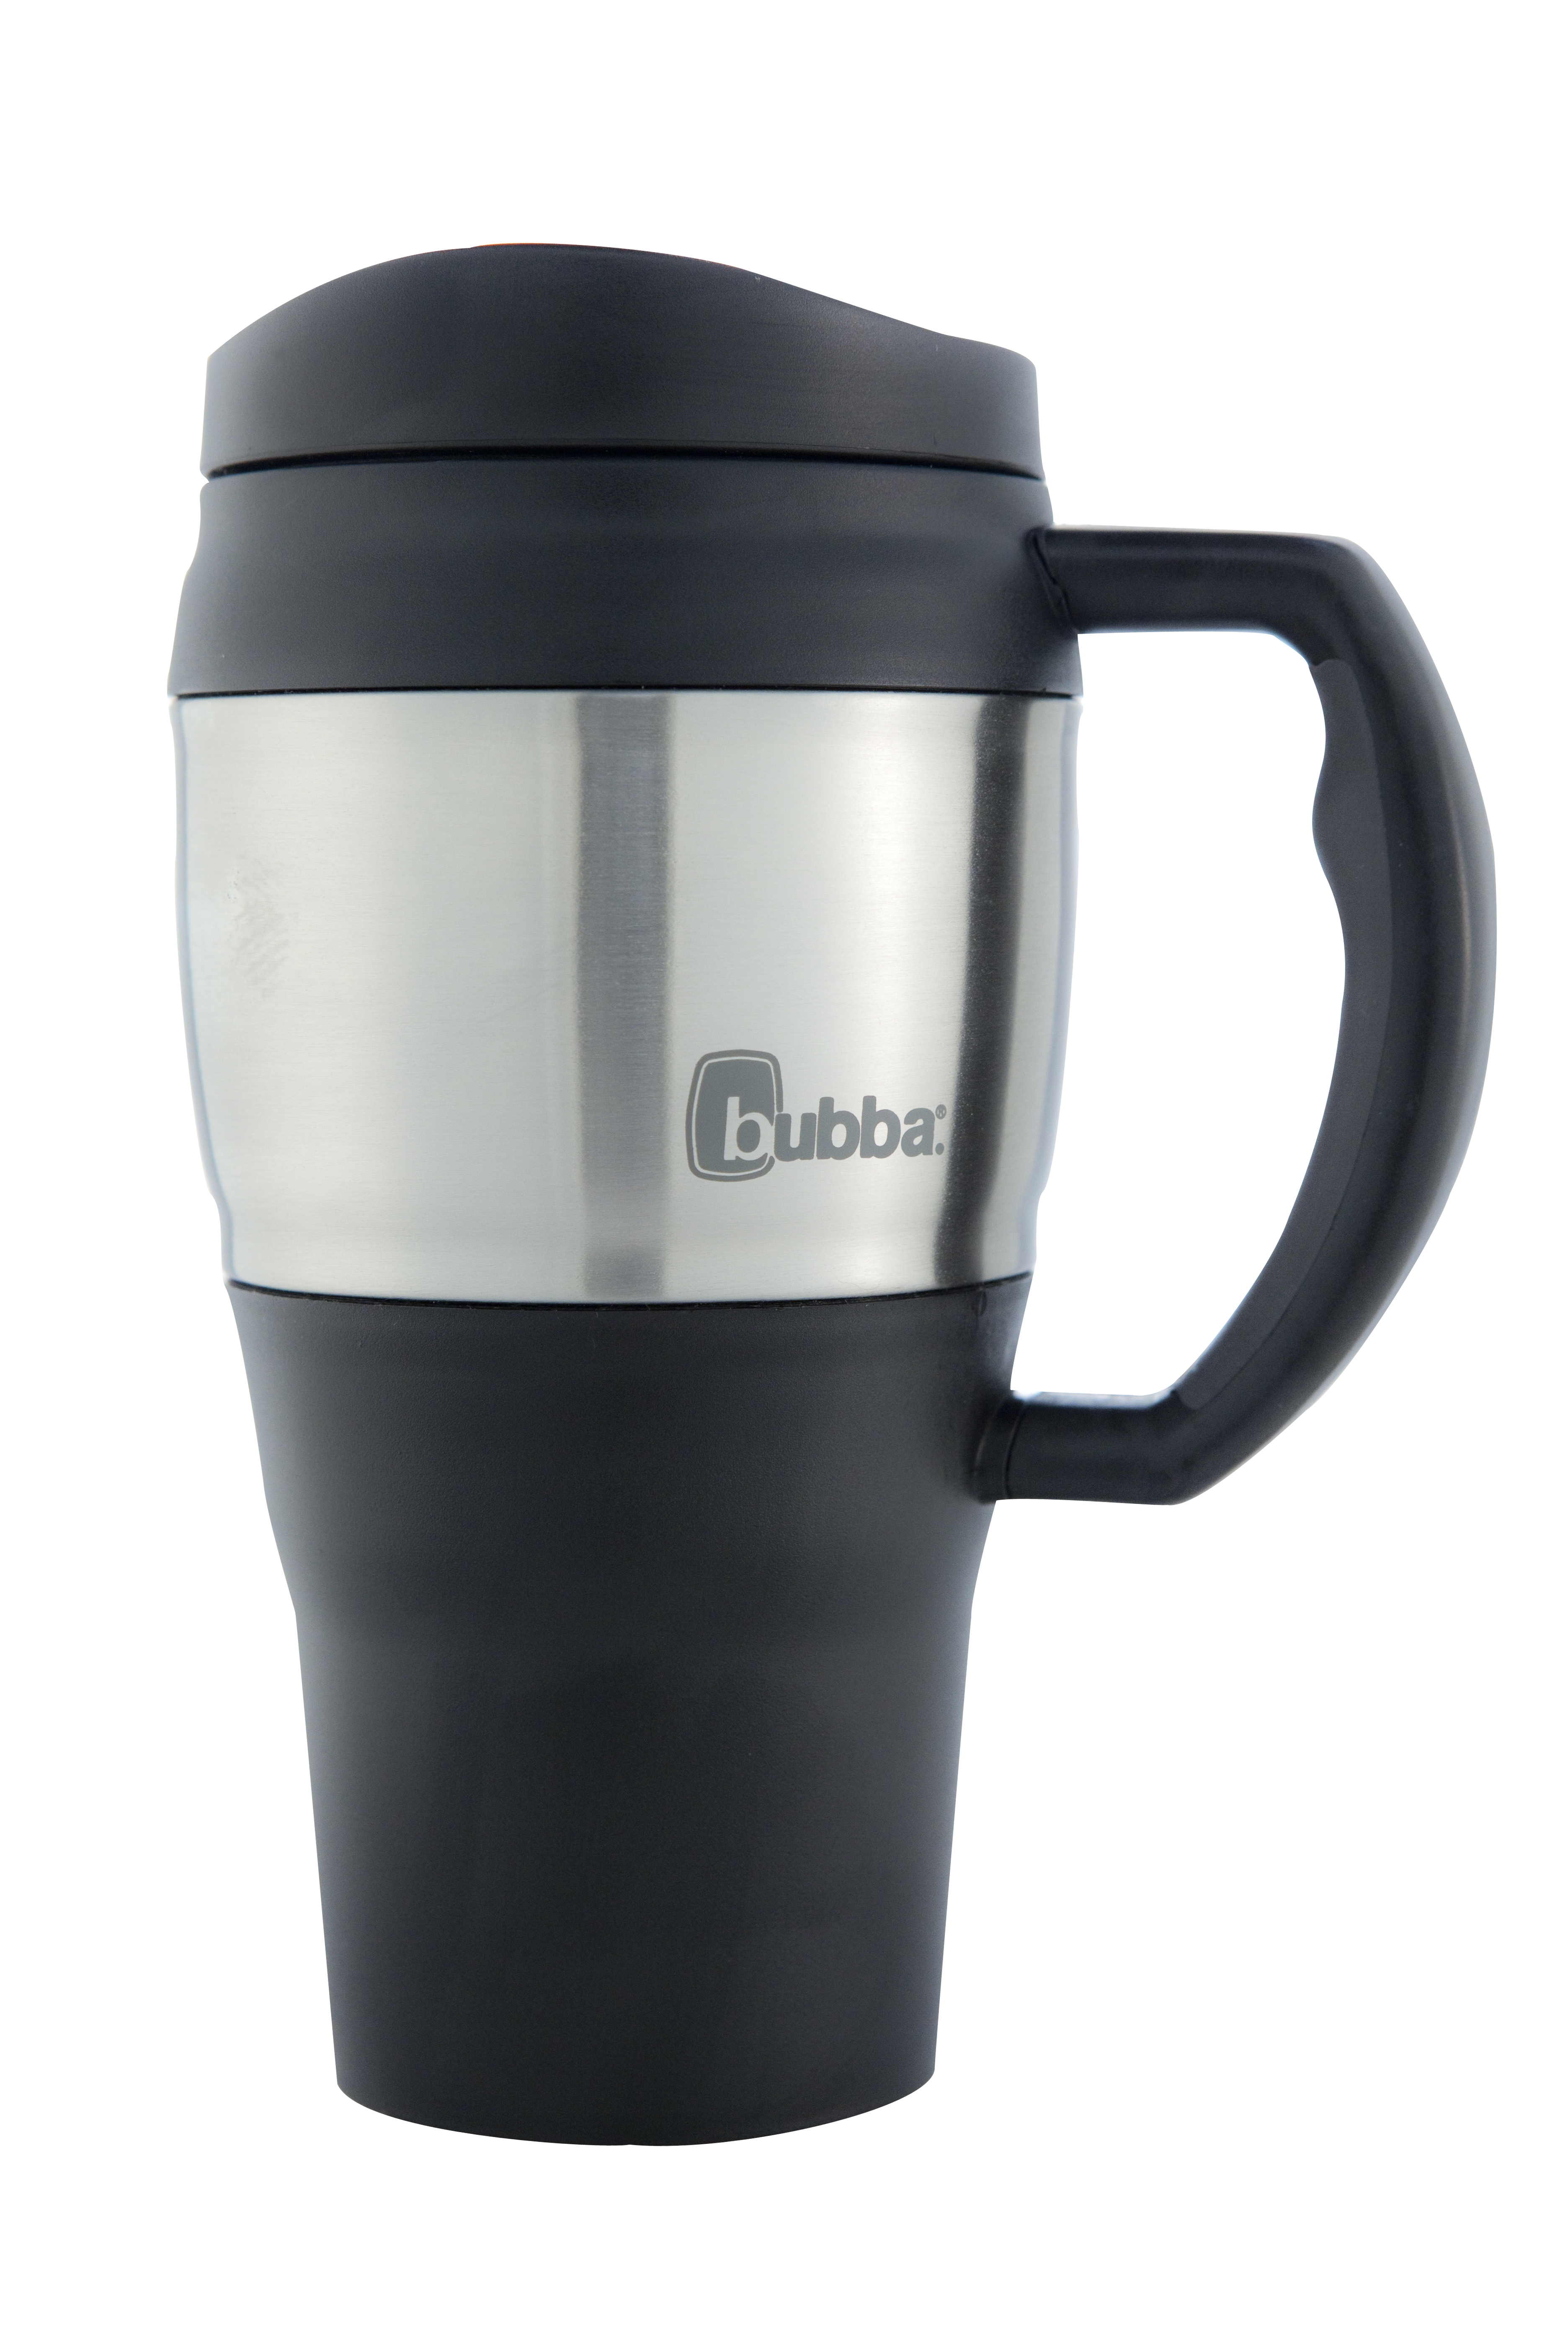 Bubba Brands 20 oz Travel Mug